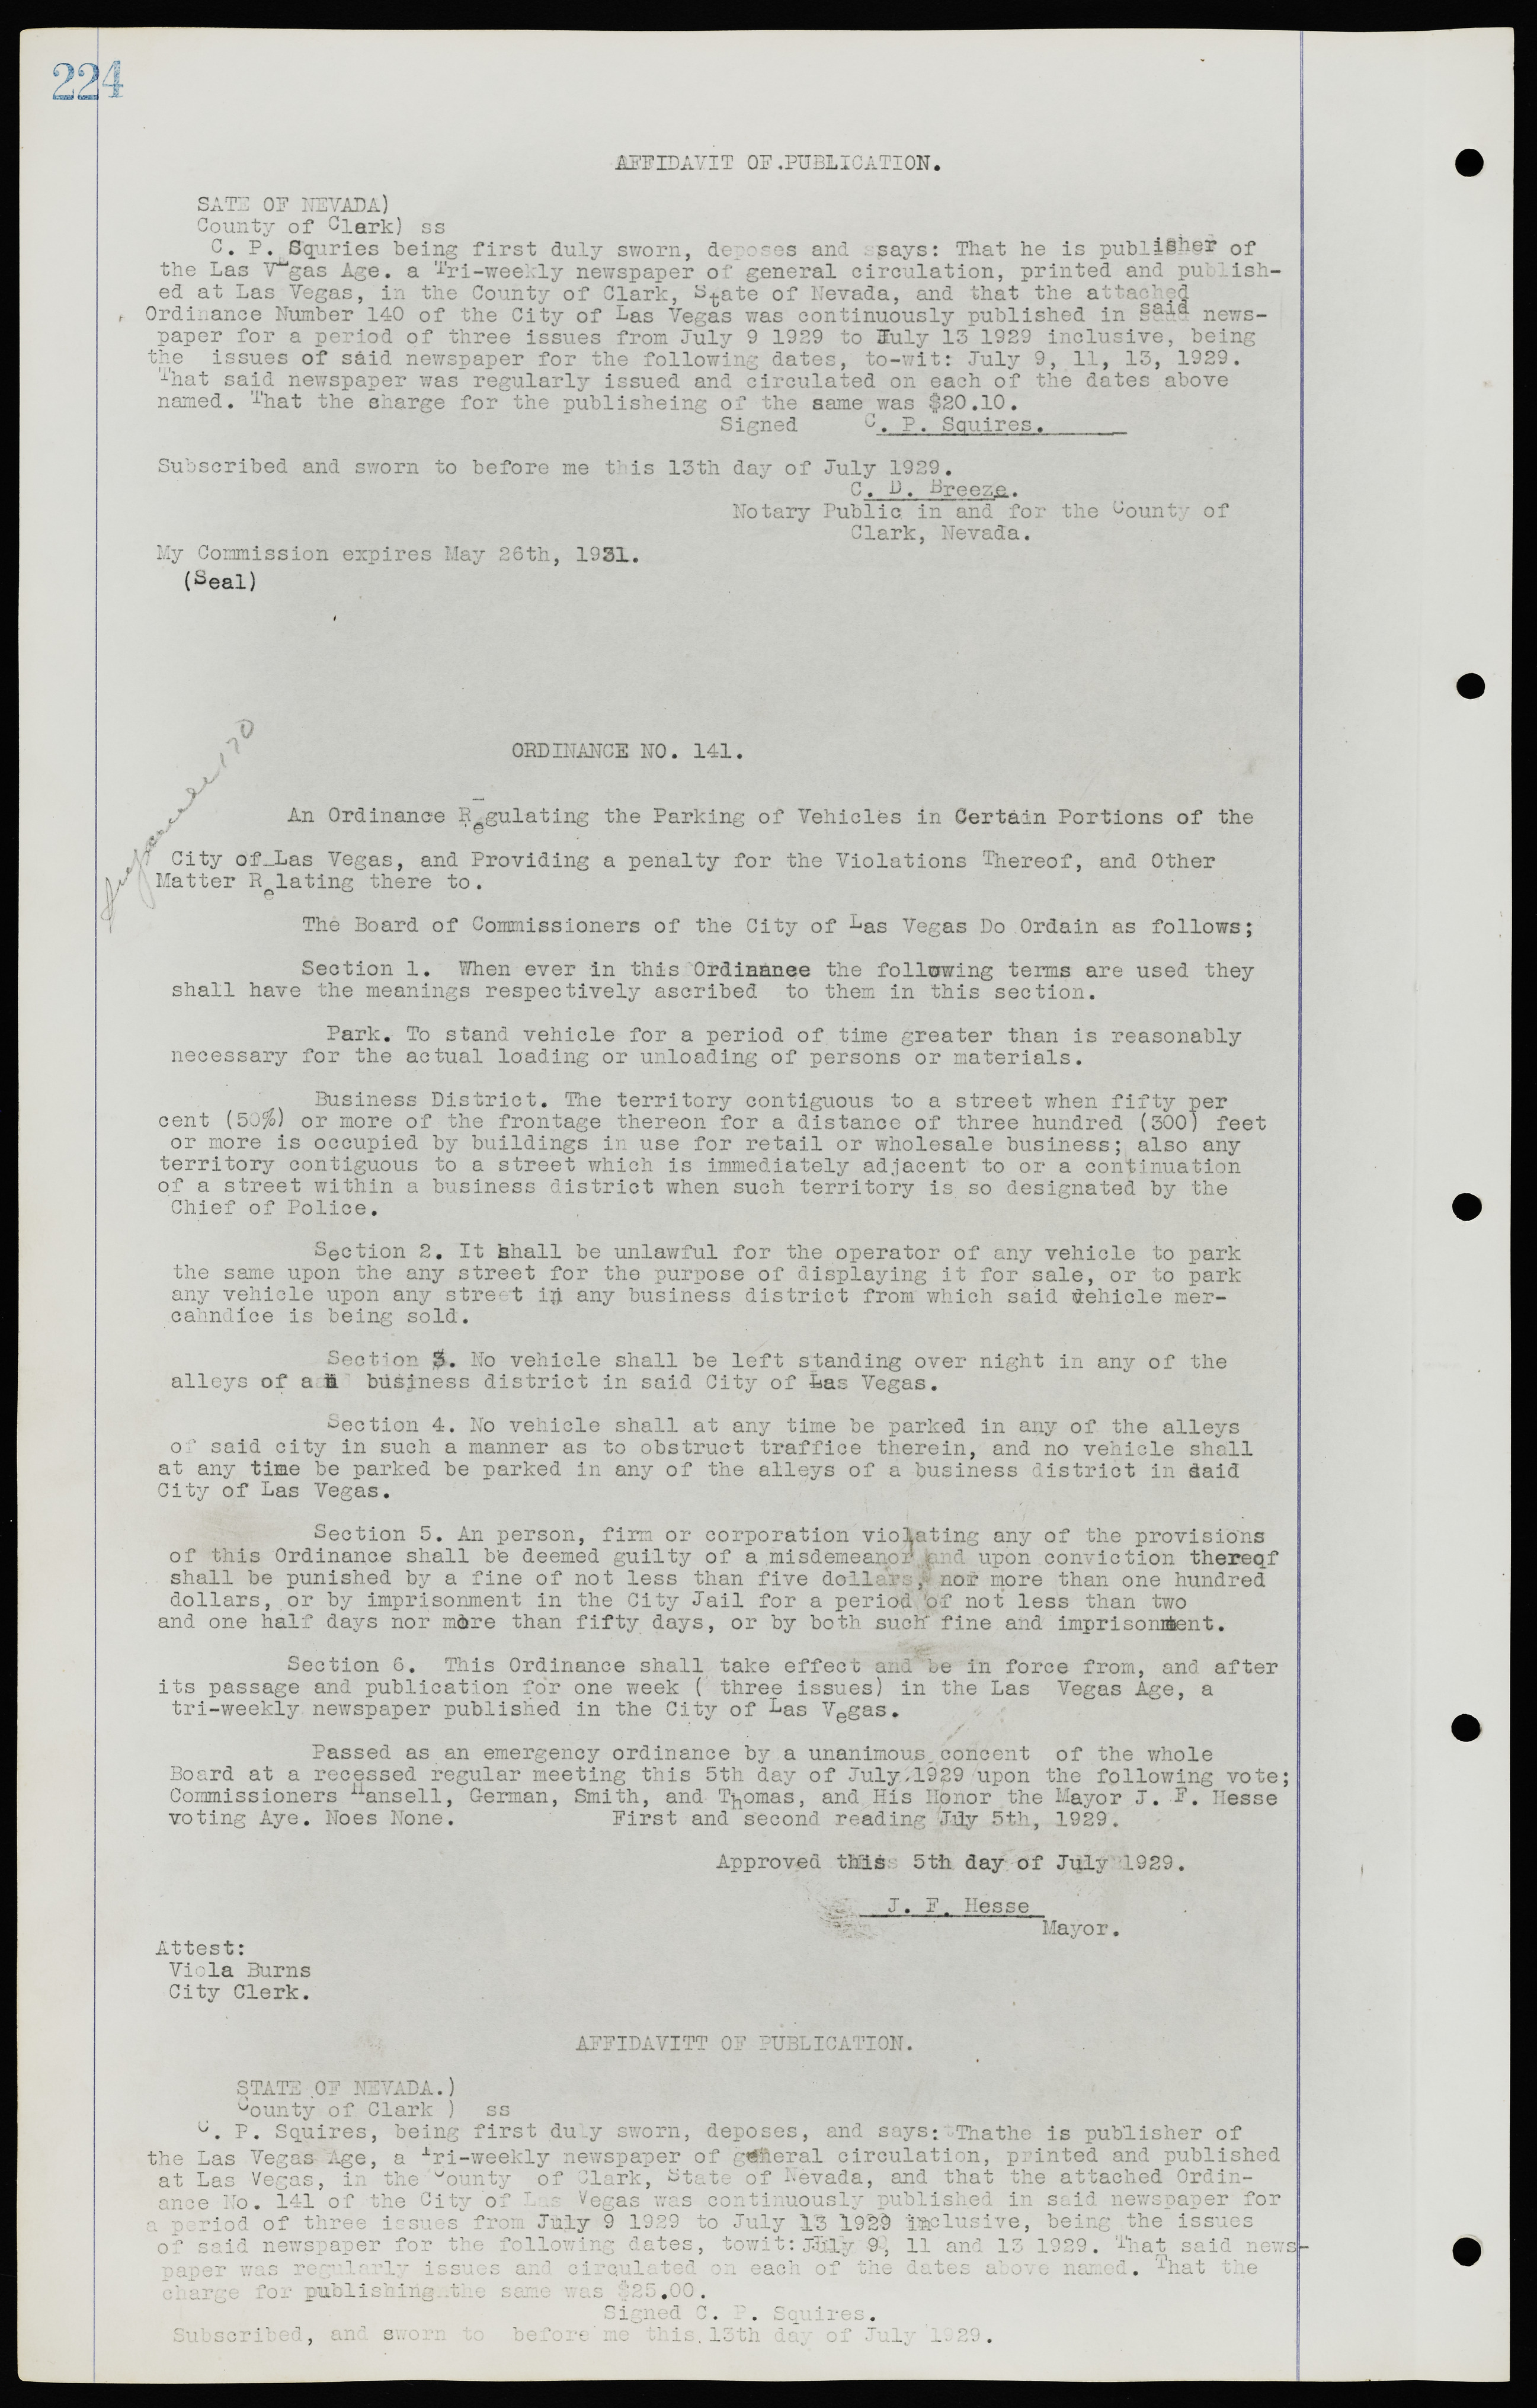 Las Vegas City Ordinances, July 18, 1911 to March 31, 1933, lvc000013-228